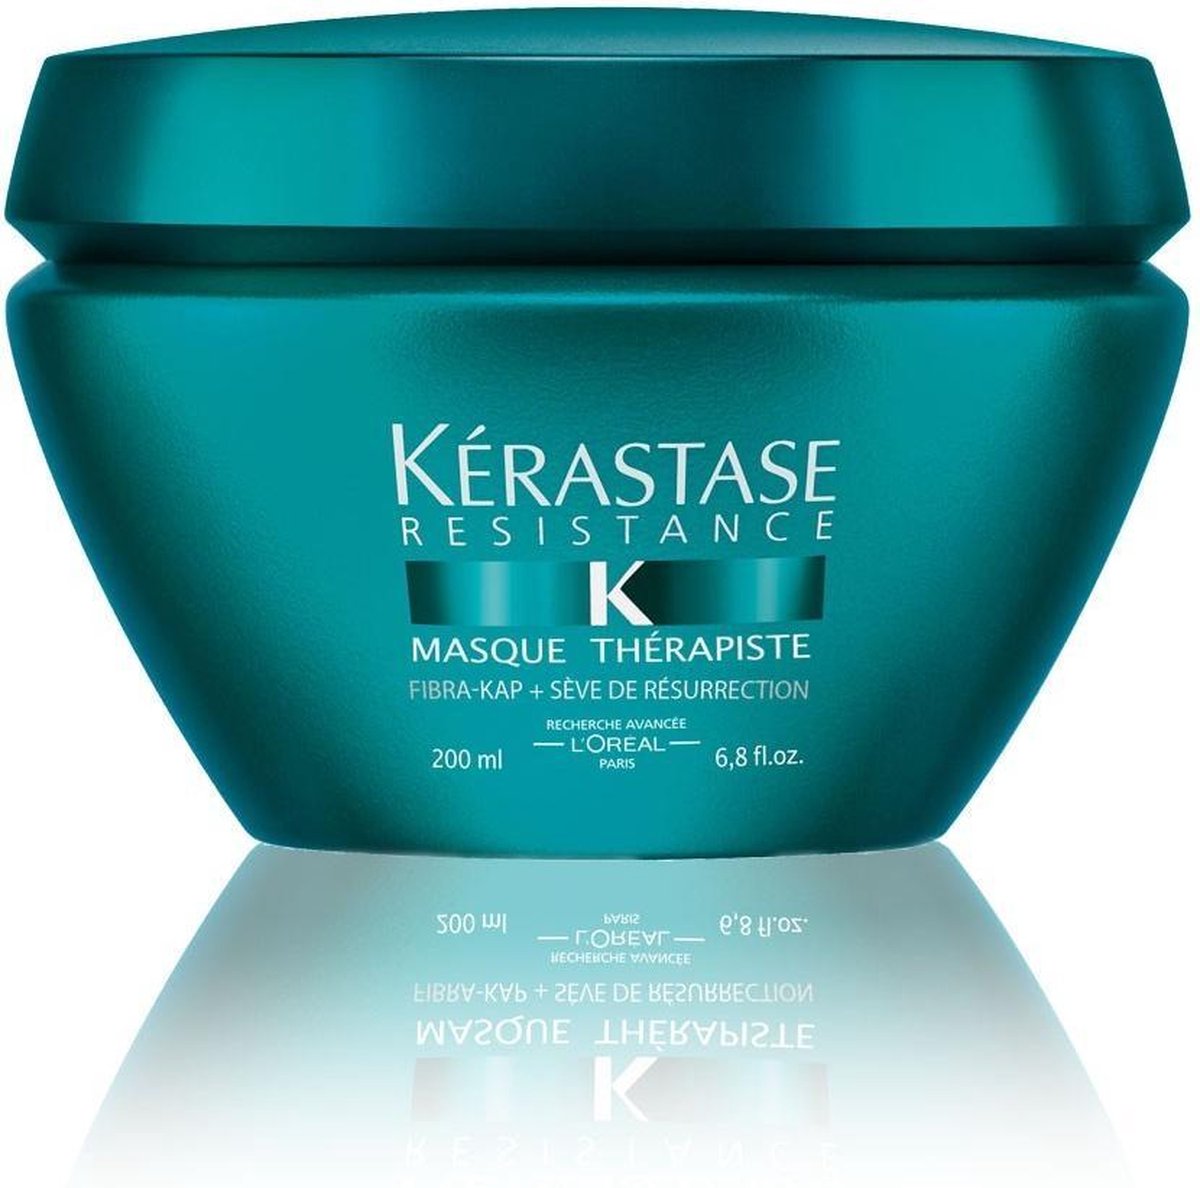 Kerastase - RESISTANCE THERAPISTE masque 200 ml